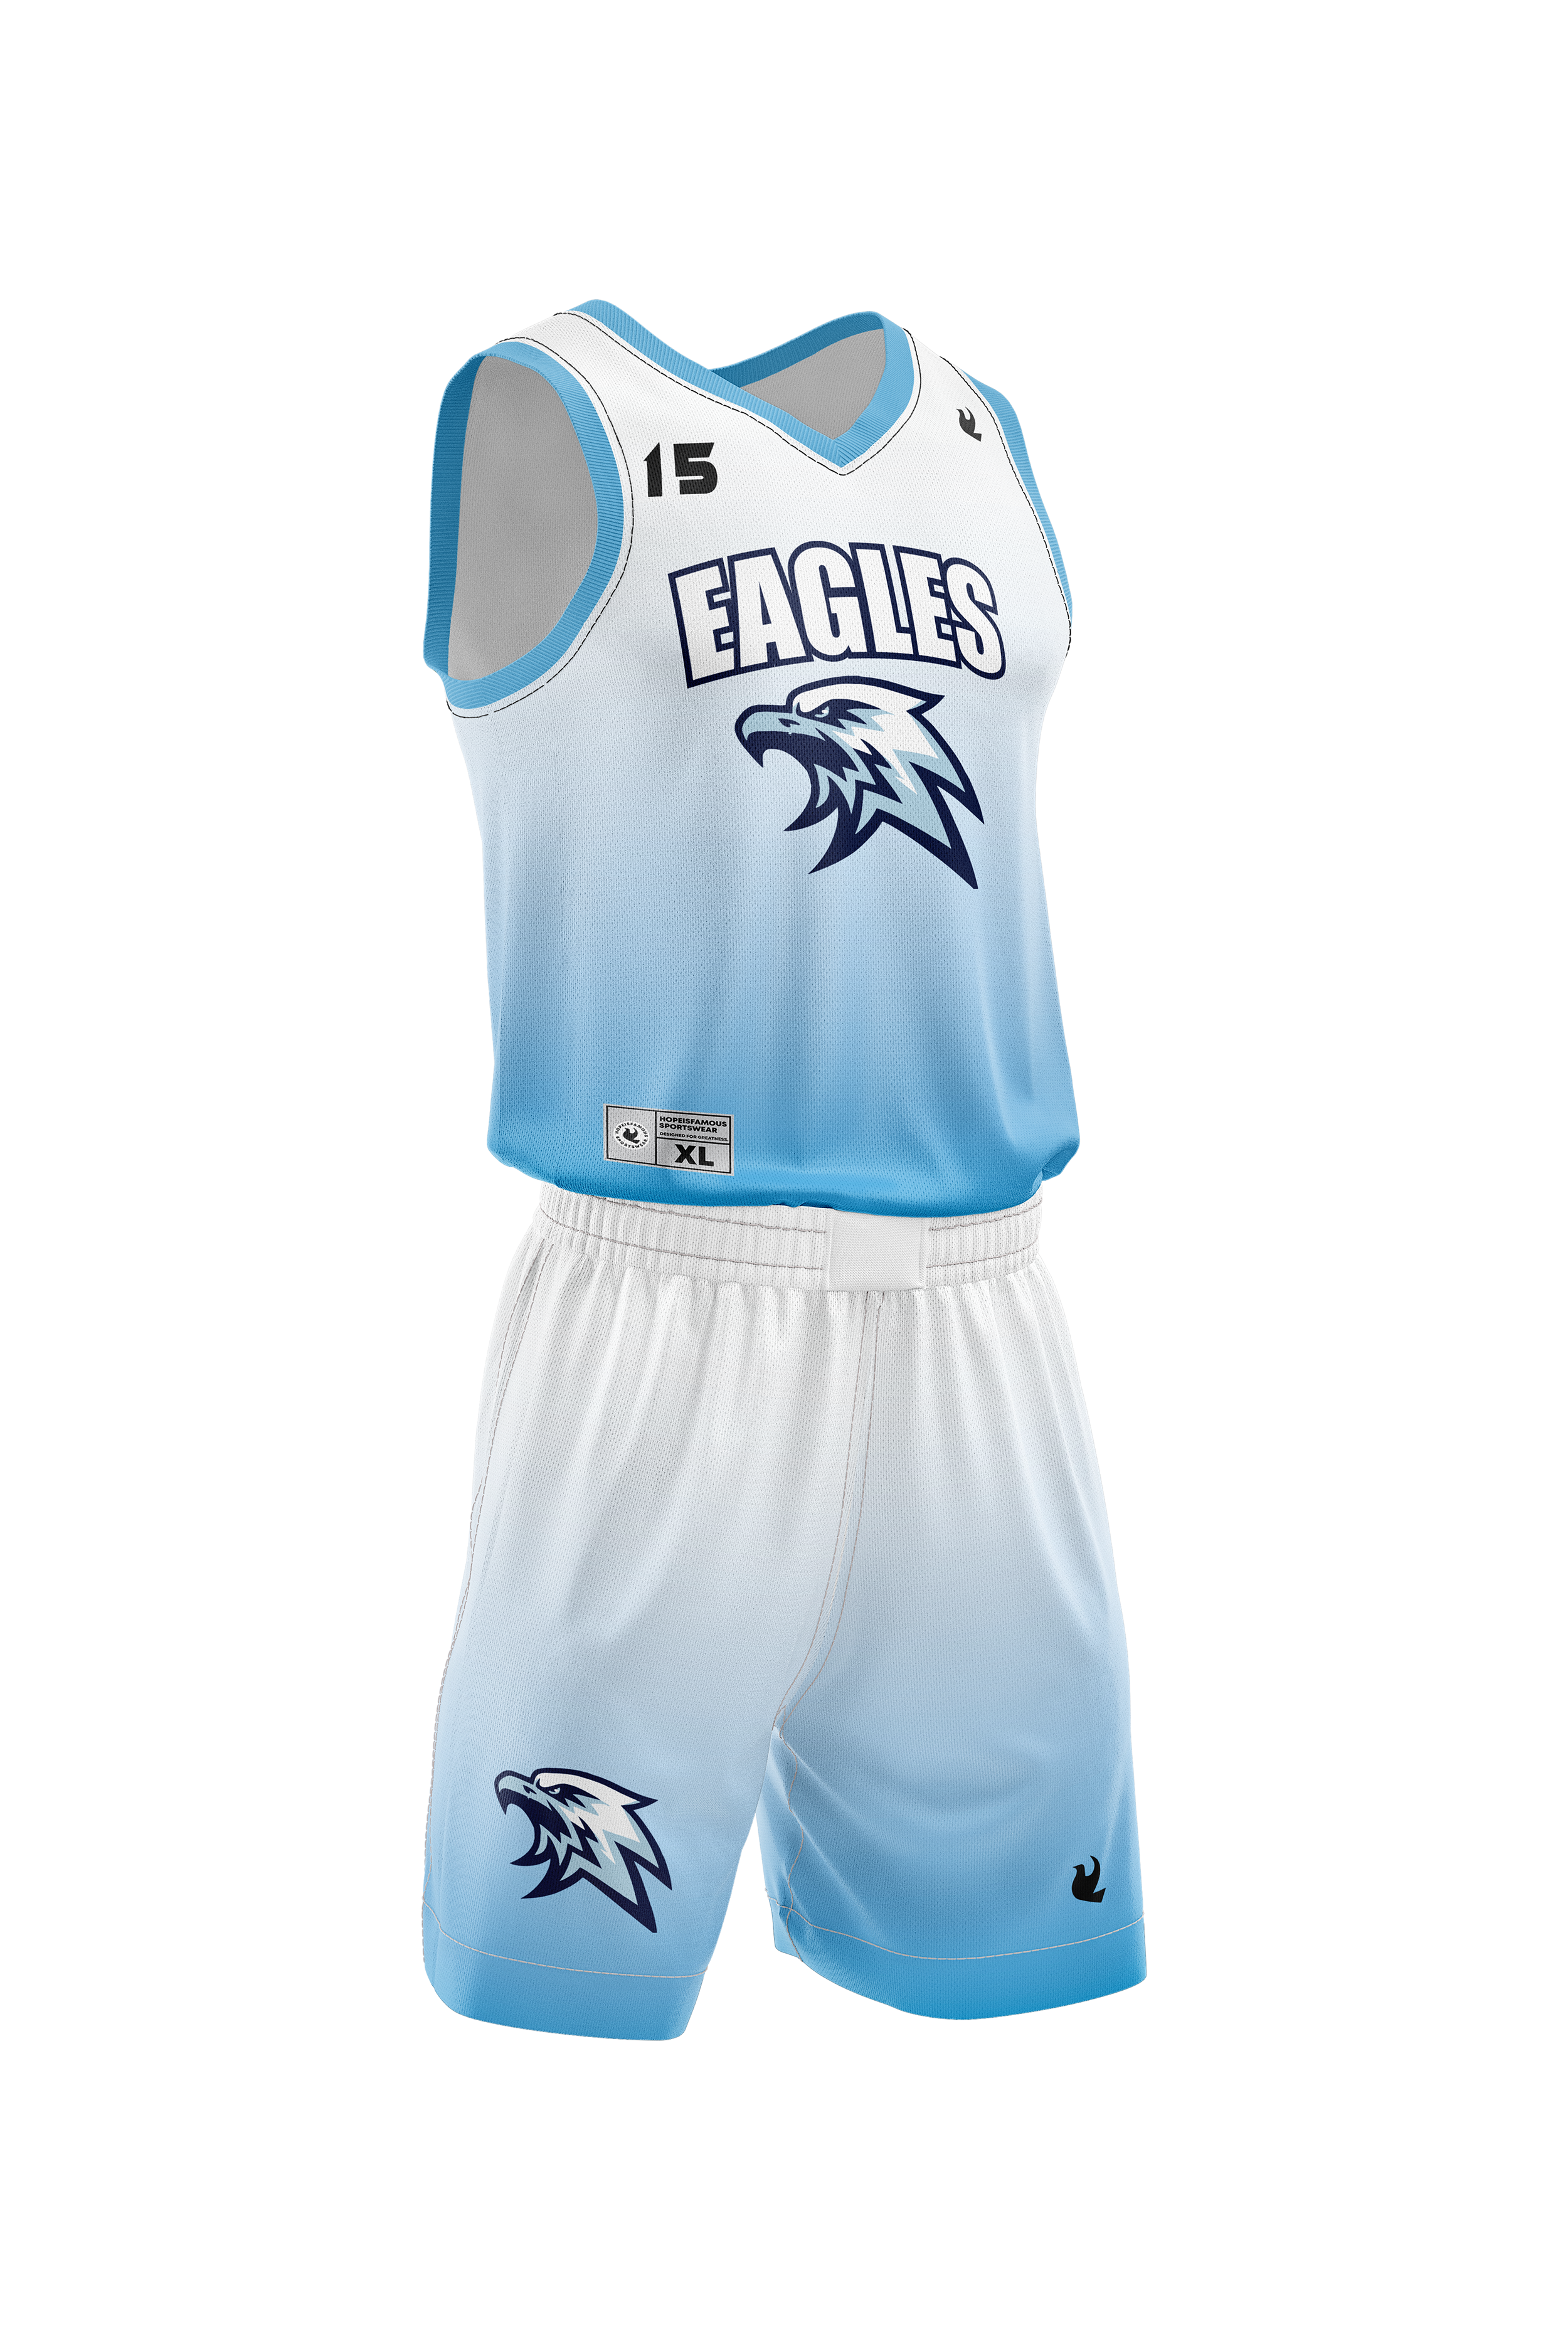 M-Power Basketball Uniform: Eagles